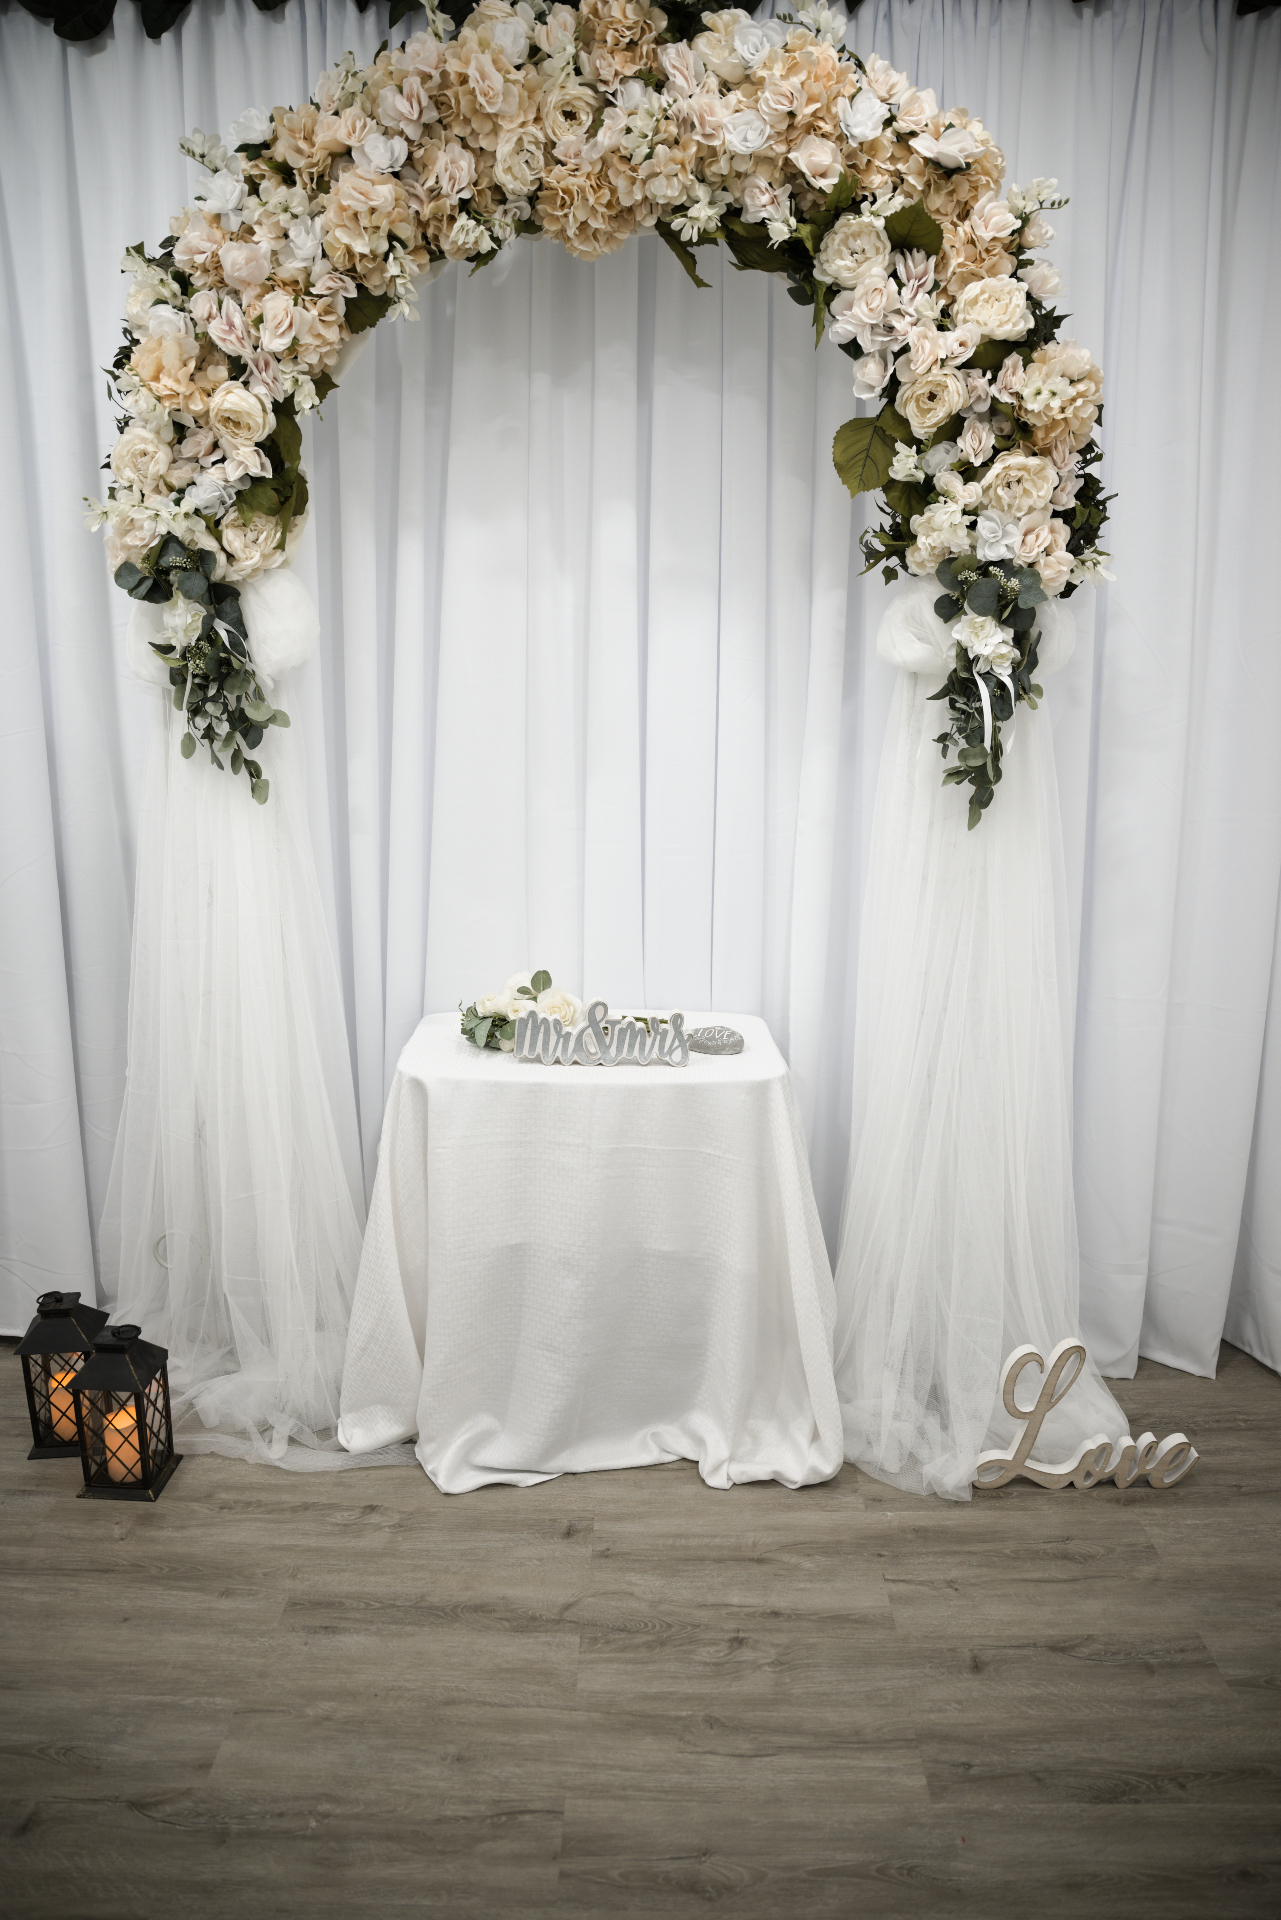 https://0201.nccdn.net/4_2/000/000/046/6ea/weddingdayromance-ceremony-suite.jpg